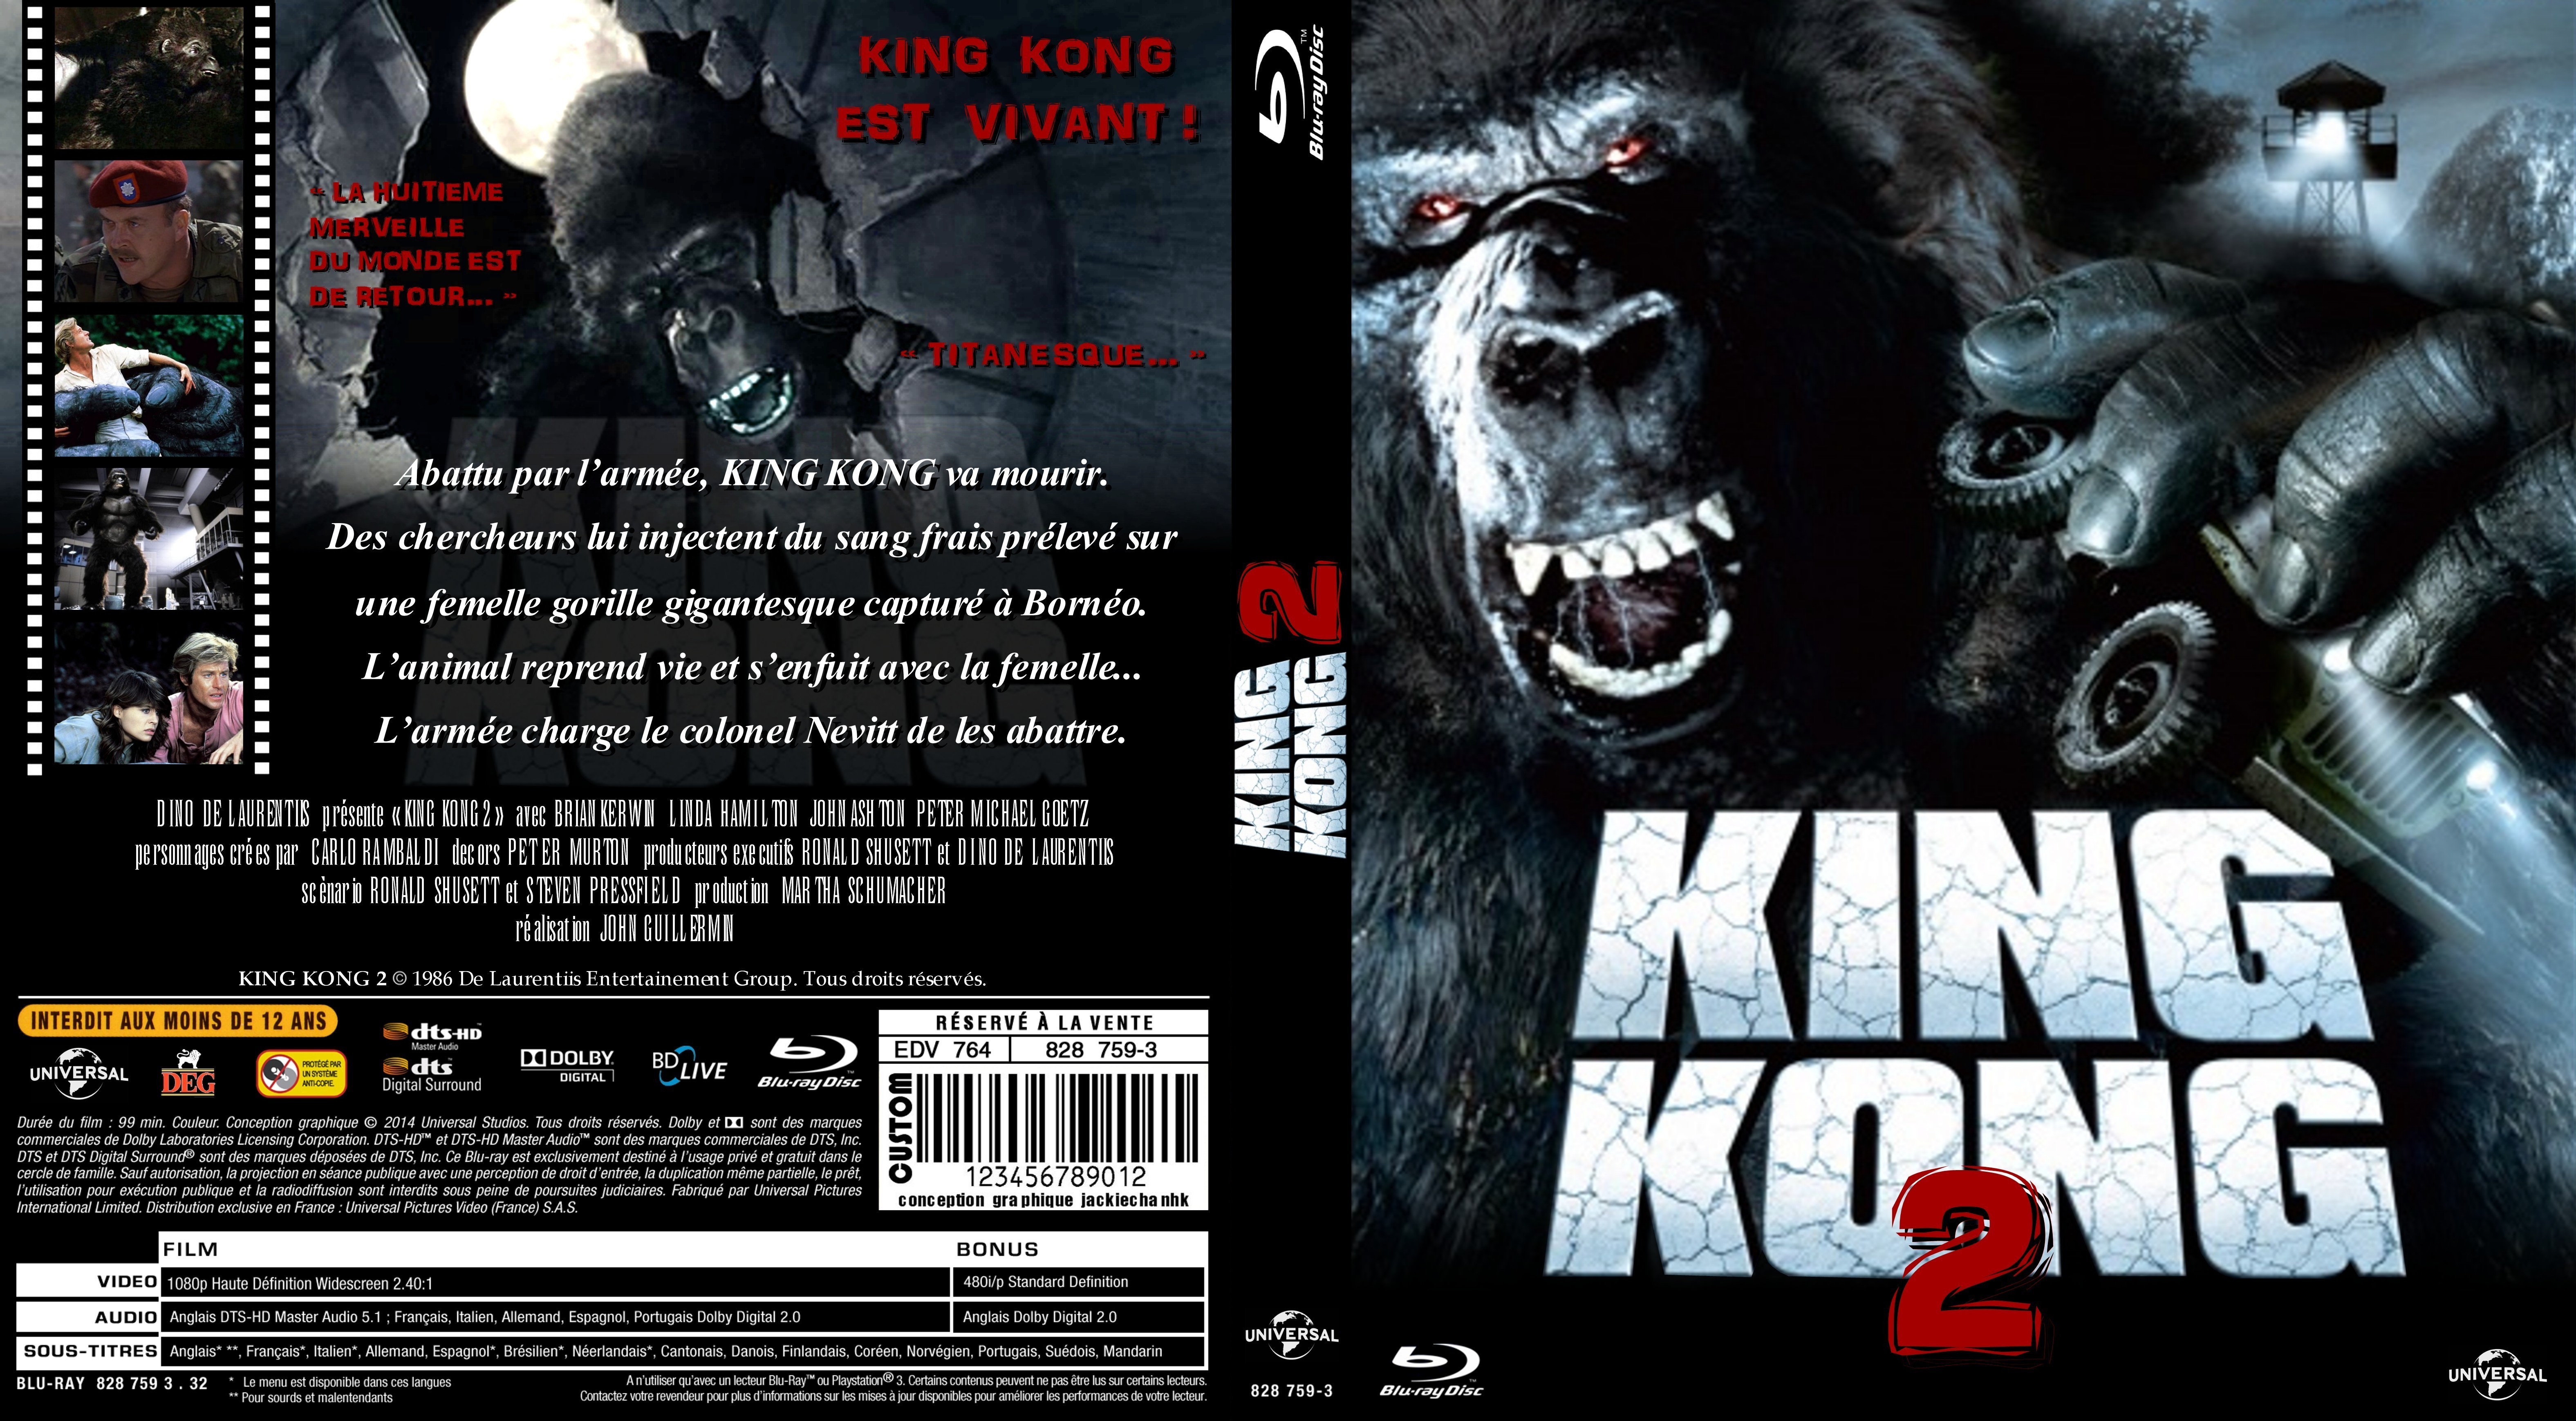 Jaquette DVD King Kong 2 custom (BLU-RAY)